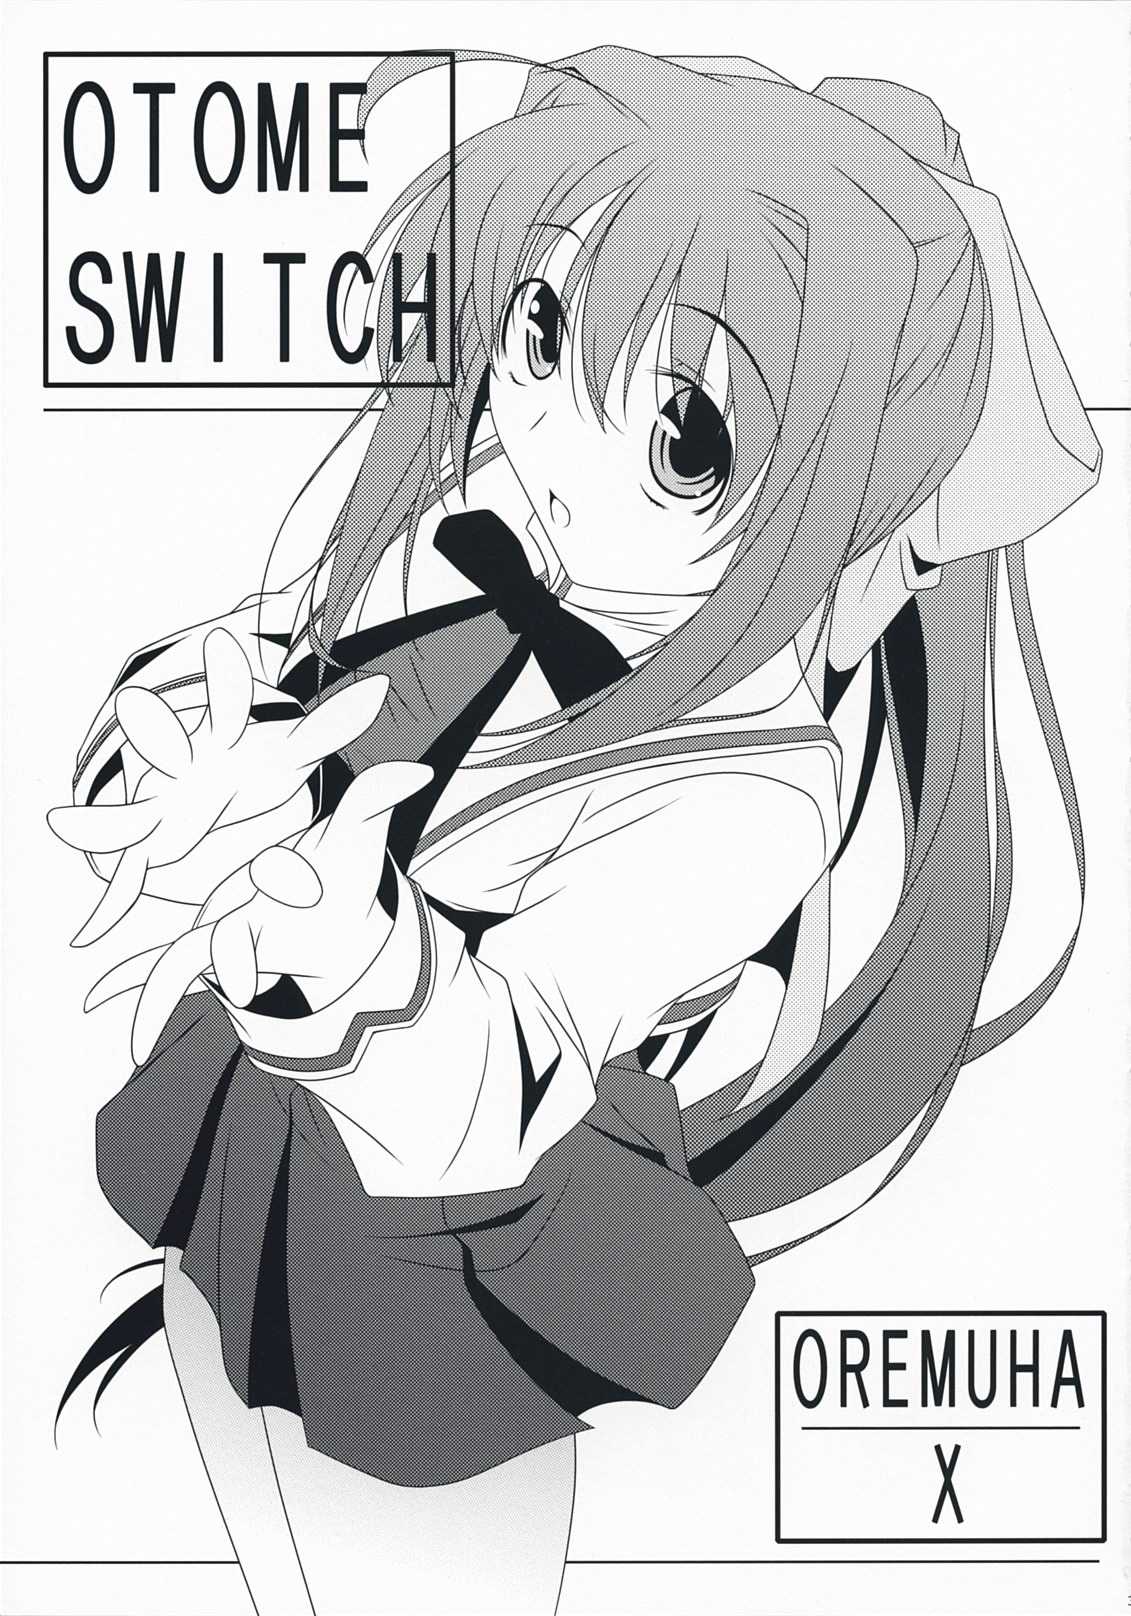 [Oremuha X] Otome Switch (Da Capo) 